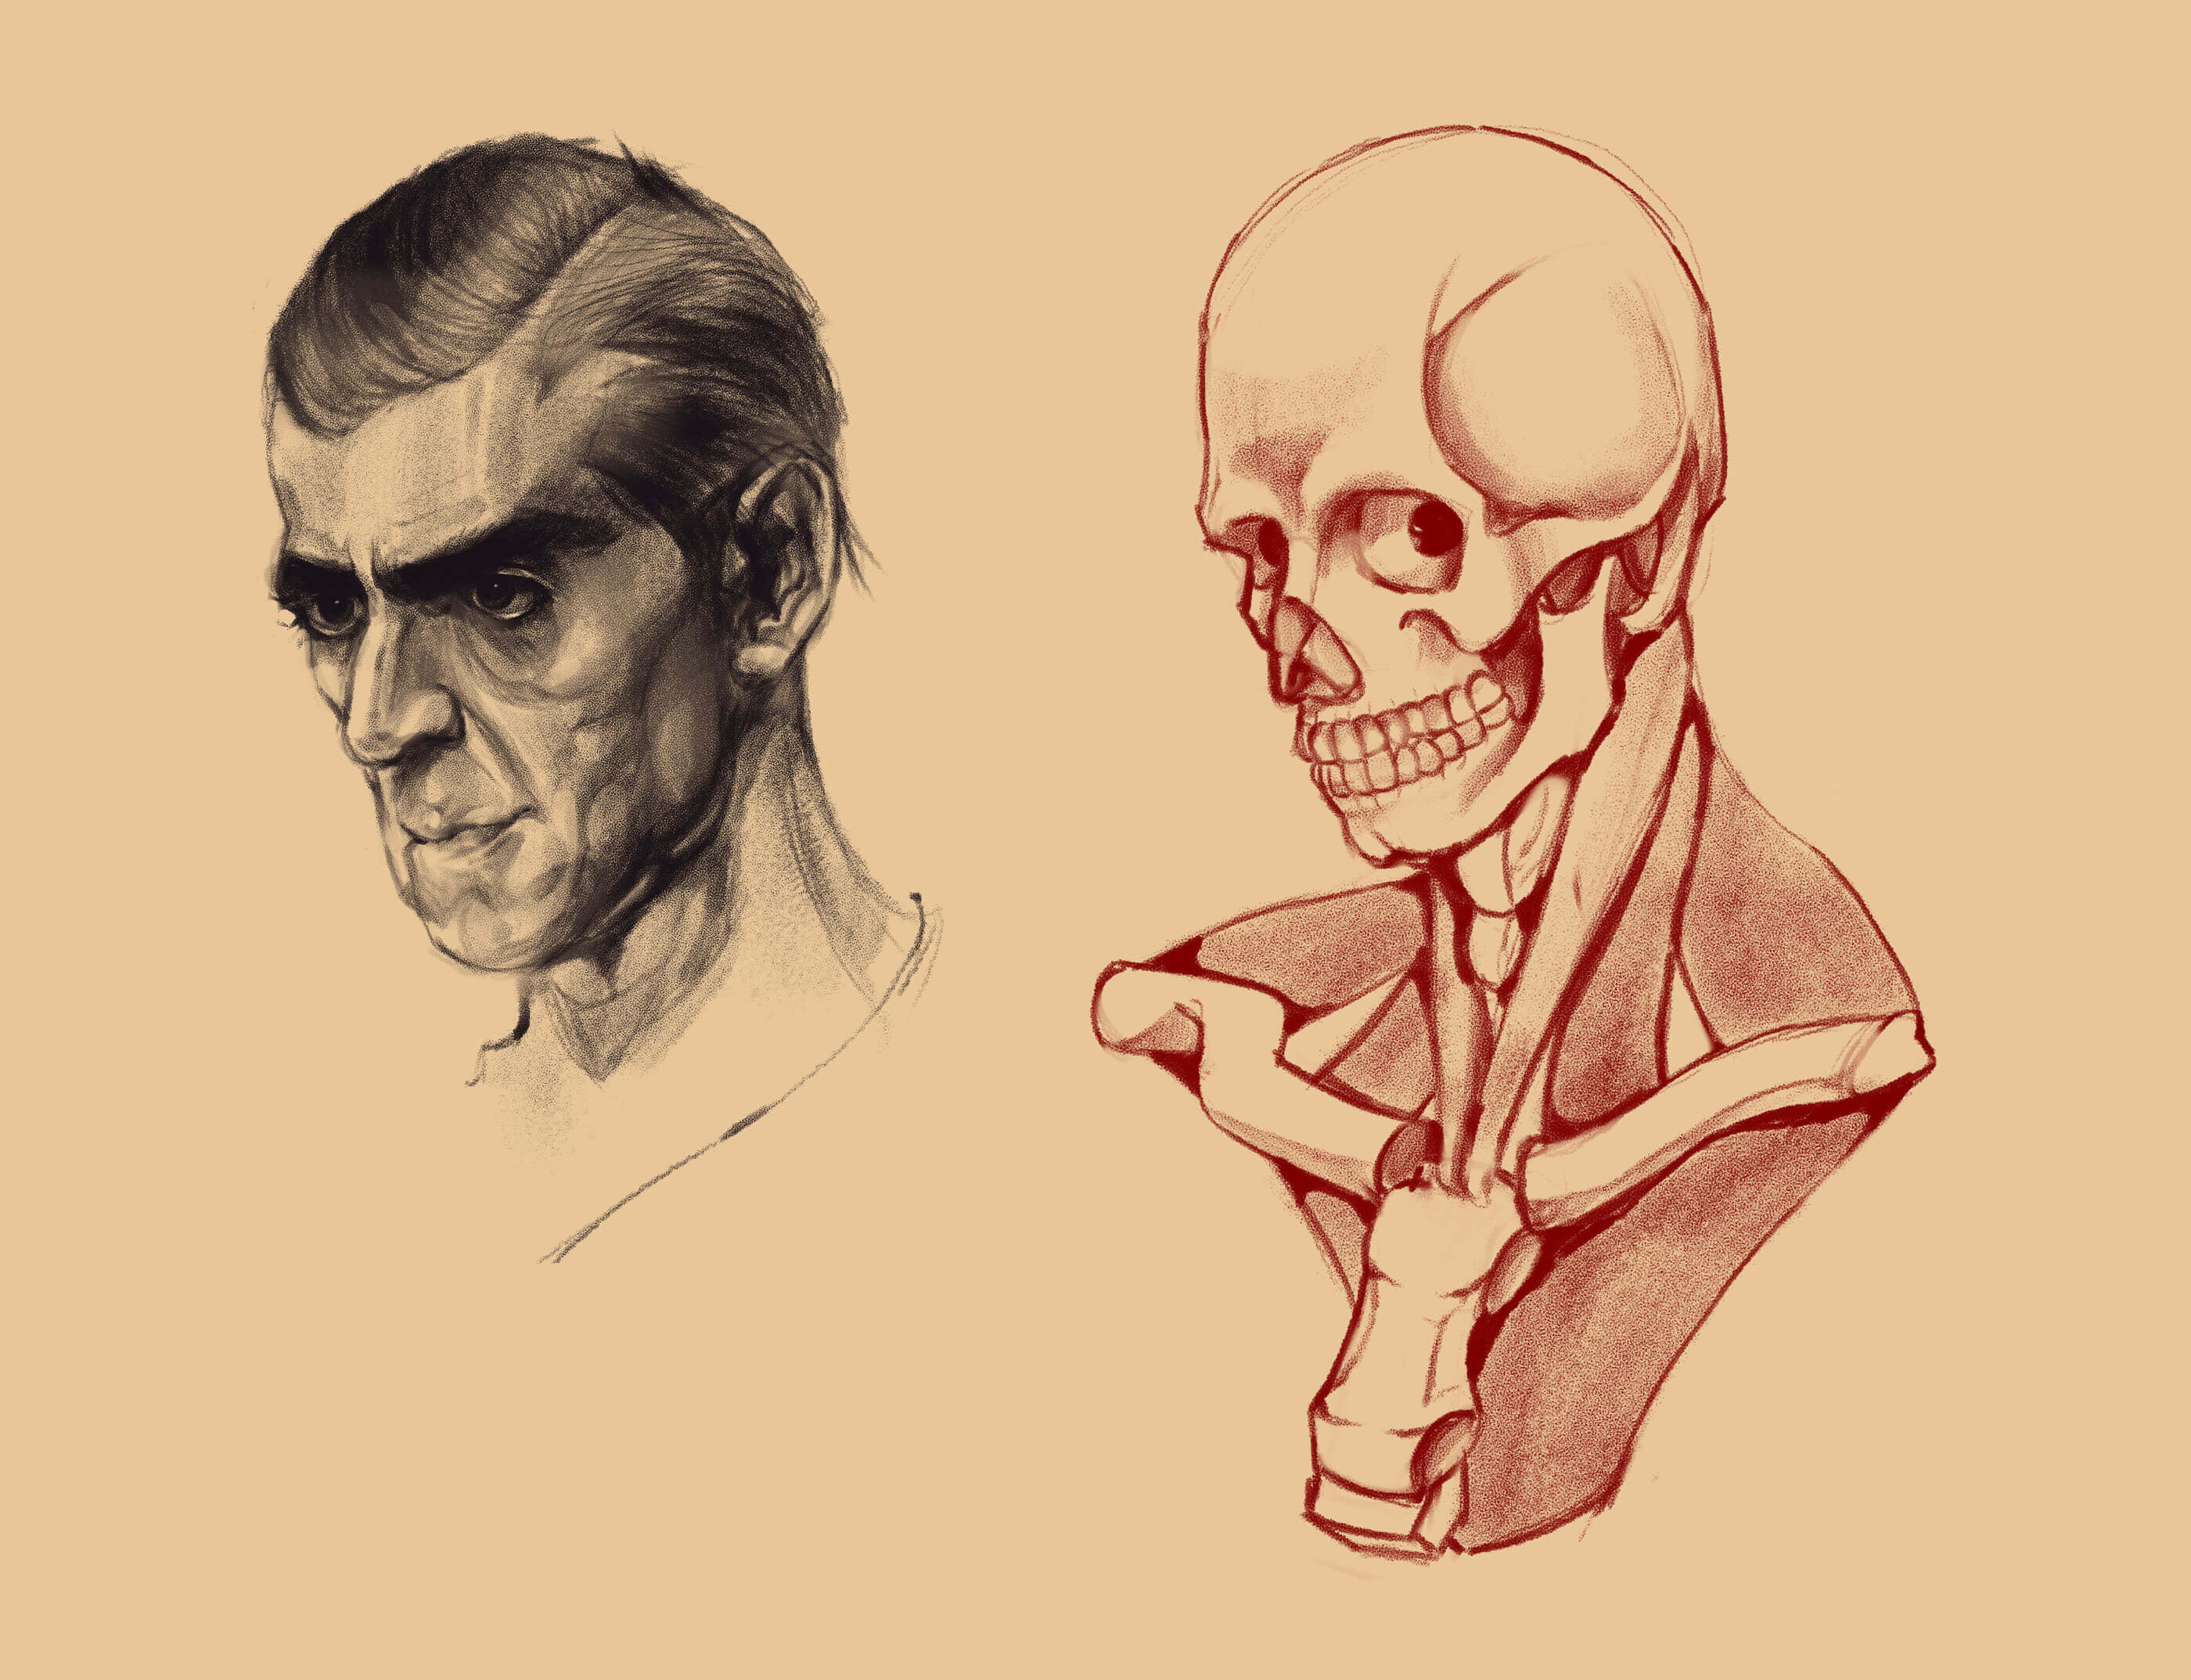 A sketch of a man next to a sketch of a skeleton head.